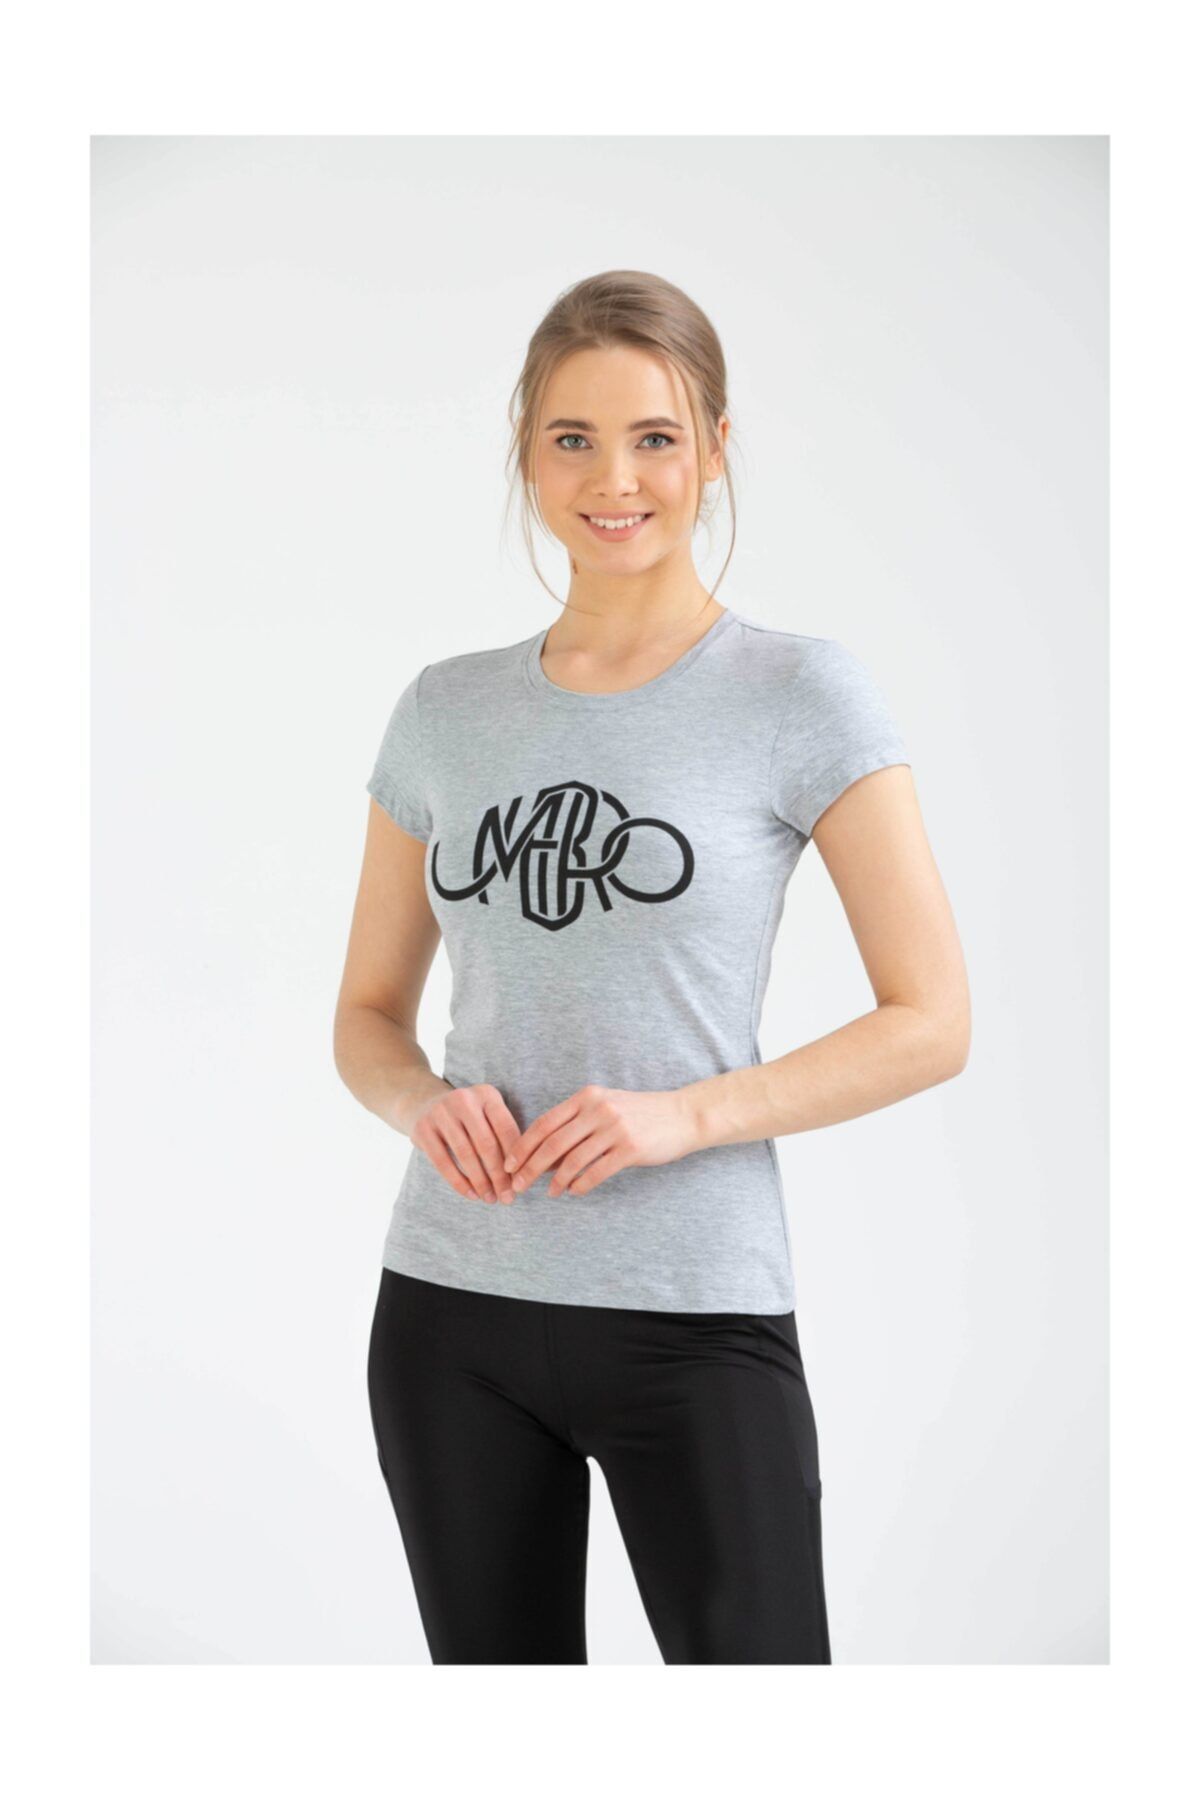 Umbro Kadın T-shirt Vf-0028 Mro Supported